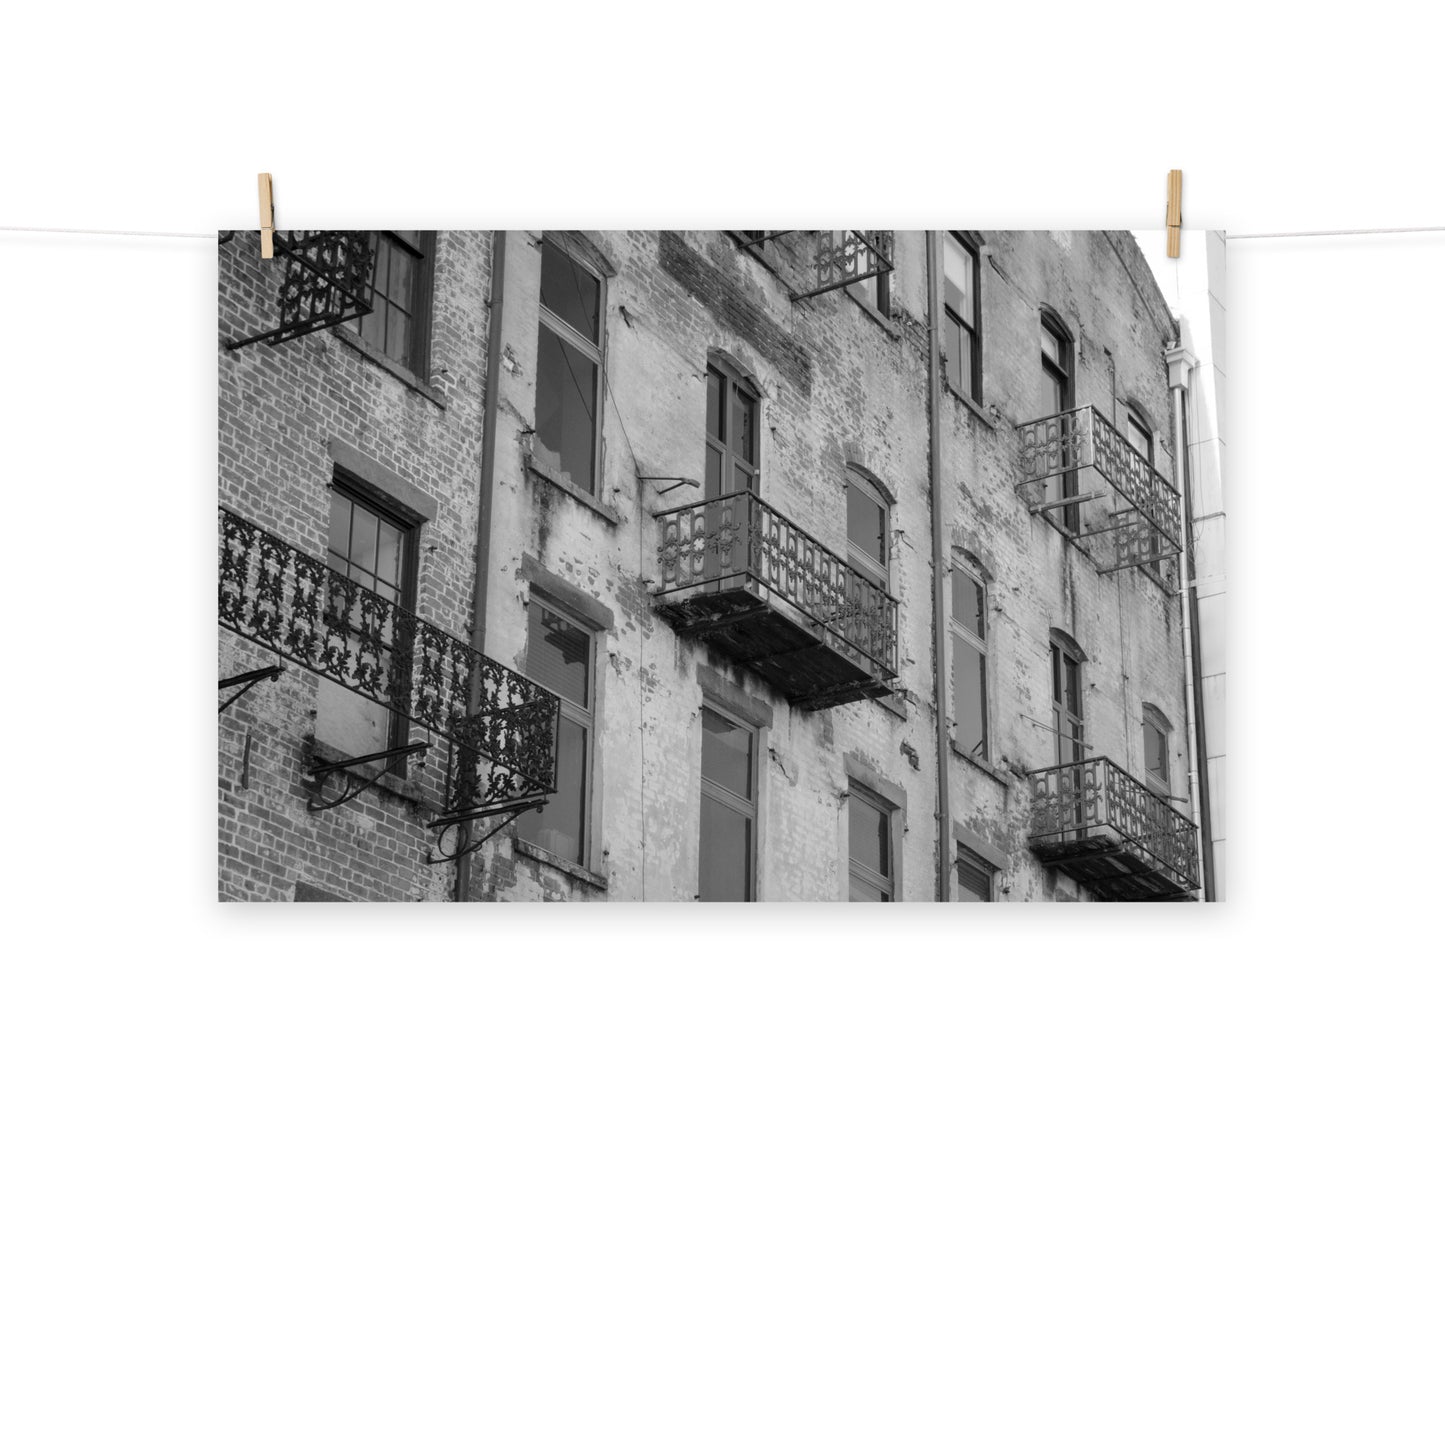 Architectural / Industrial / Cityscape Abstract Decor Old Iron Balcony River Street Savannah Ga 3 Loose Wall Art Print 8" x 10"